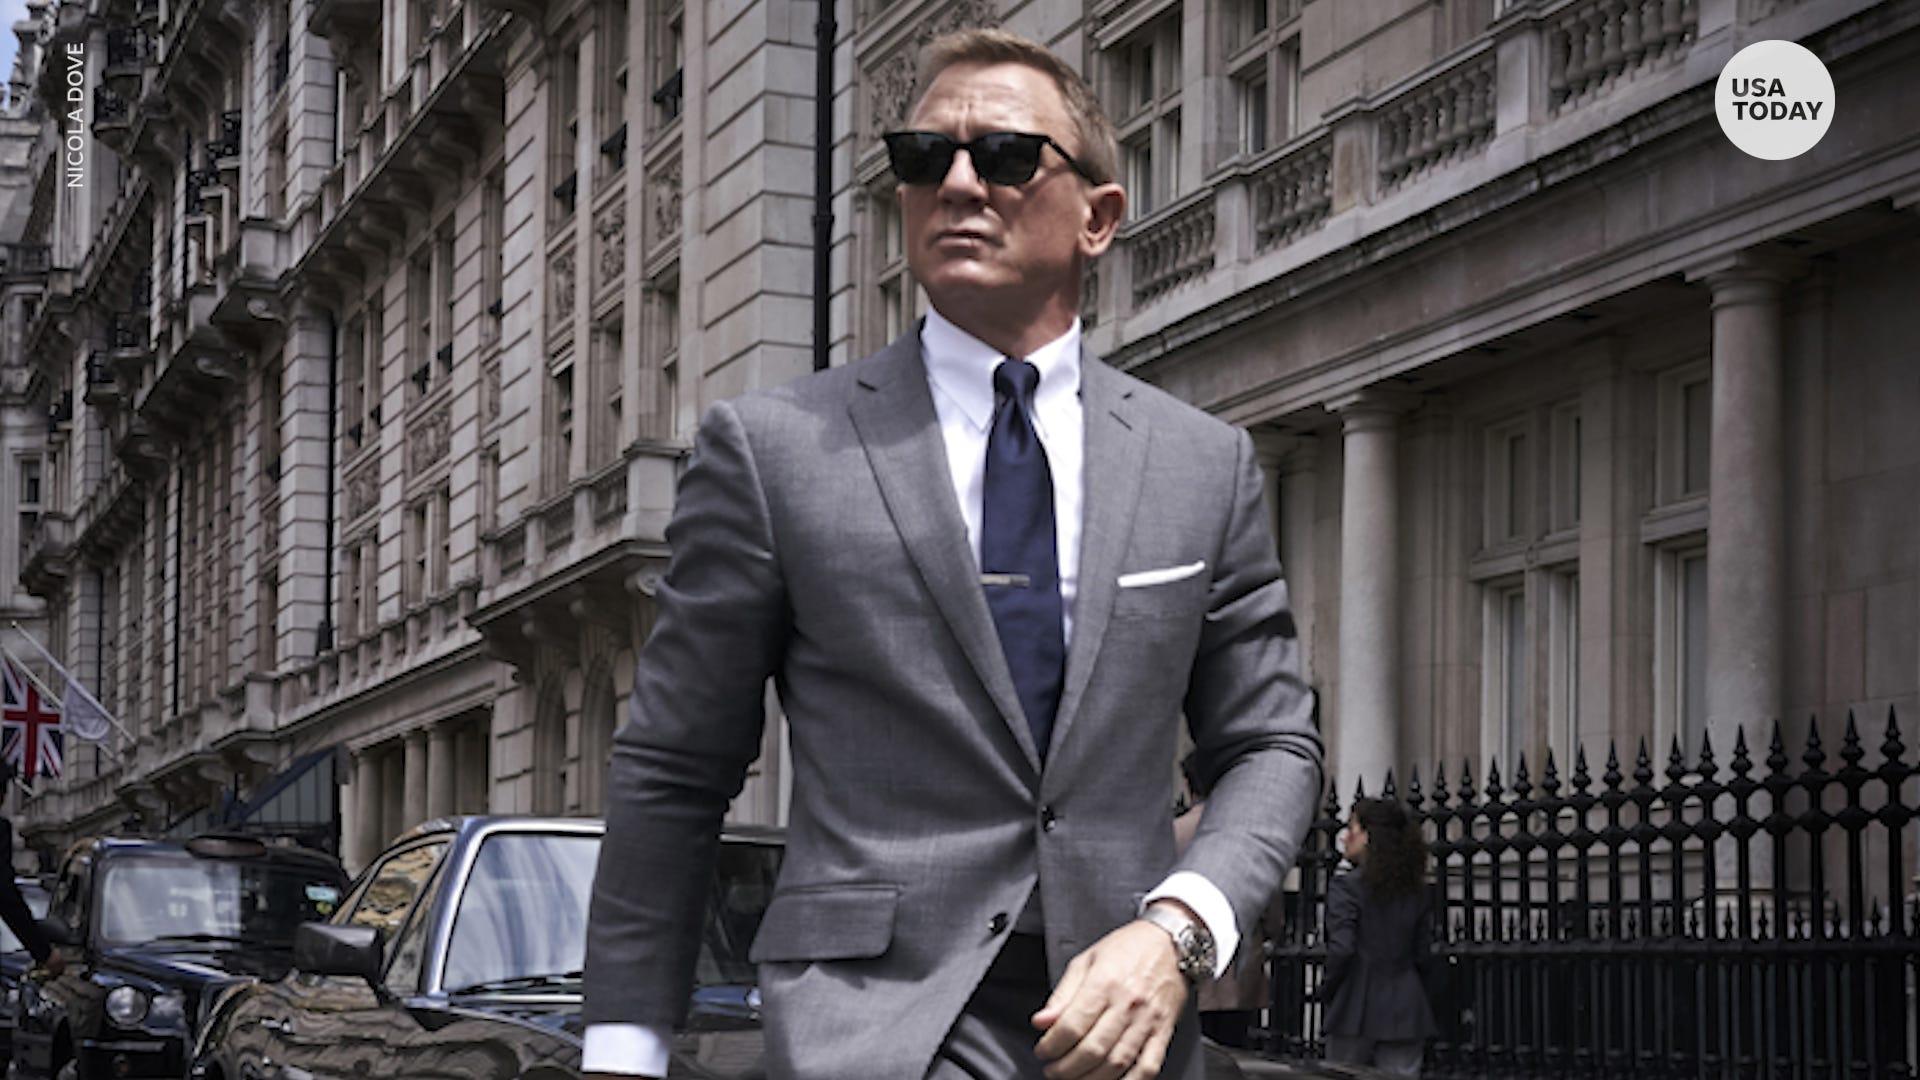 The title Daniel Craig's next James Bond film is finally revealed